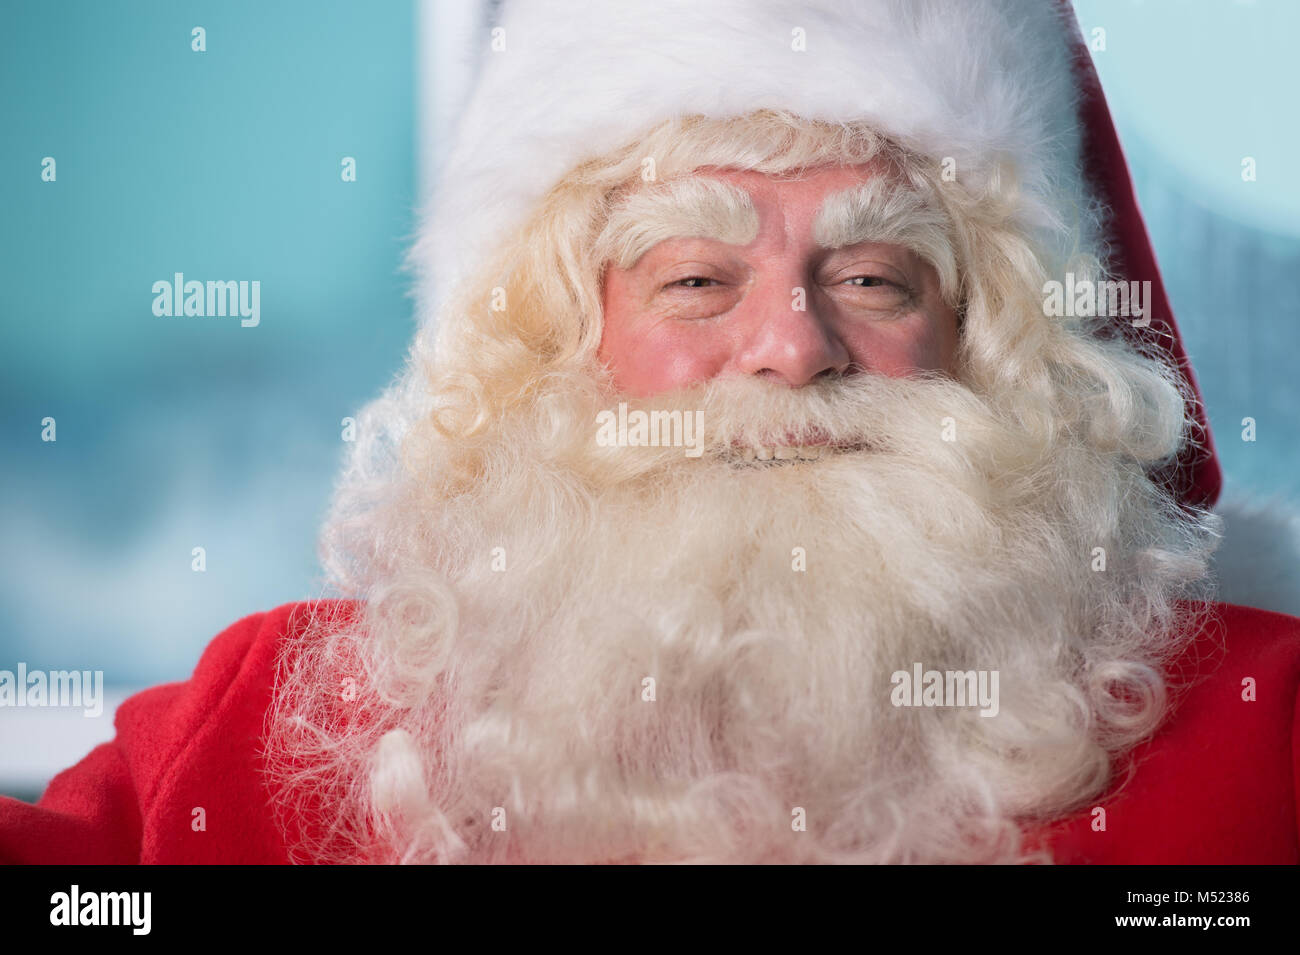 Santa Claus closeup portrait indoors in real life Stock Photo - Alamy